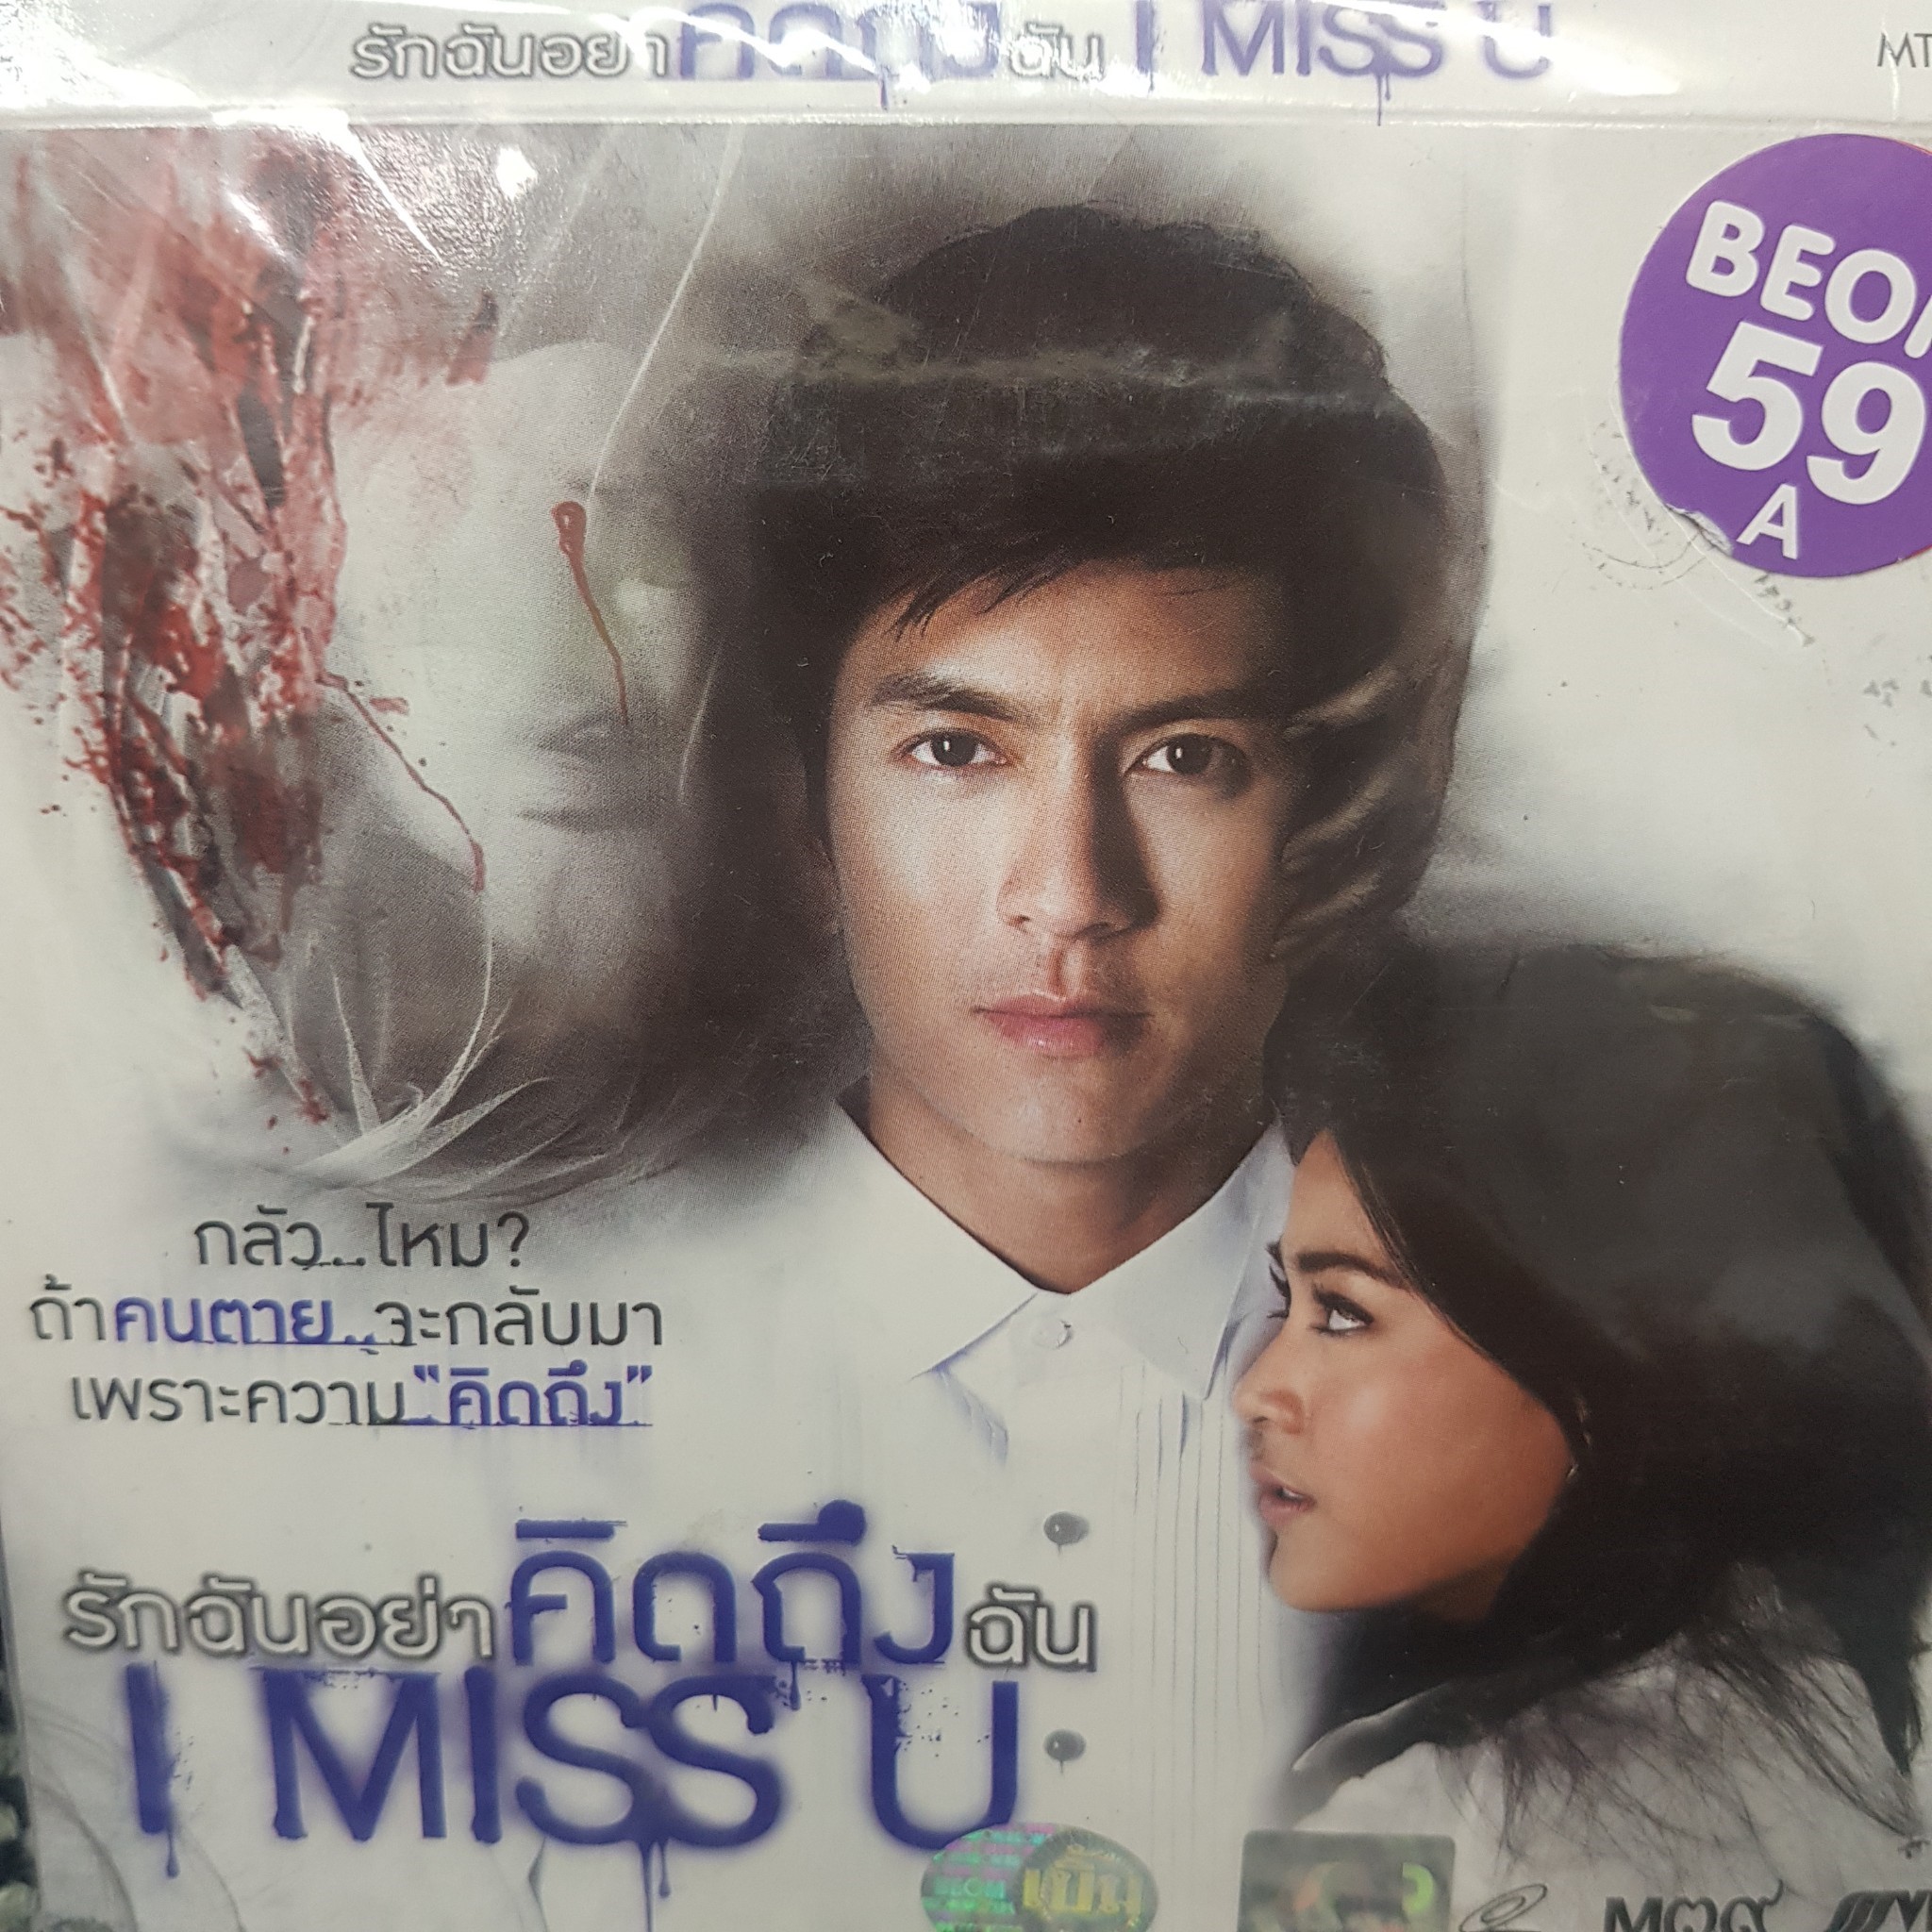 VCDหนัง รักฉันอย่าคิดถึงฉัน i miss you พากย์ไทย (SBYVCD2020-รักฉันอย่าคิดถึงฉัน) ผี ระทึกขวัญ แผ่นหนัง สะสม หนังโรงภาพยนตร์ ภาพยนตร์ หนังไทยเก่า หนัง งาน2020 cinema vcd วีซีดี STARMART